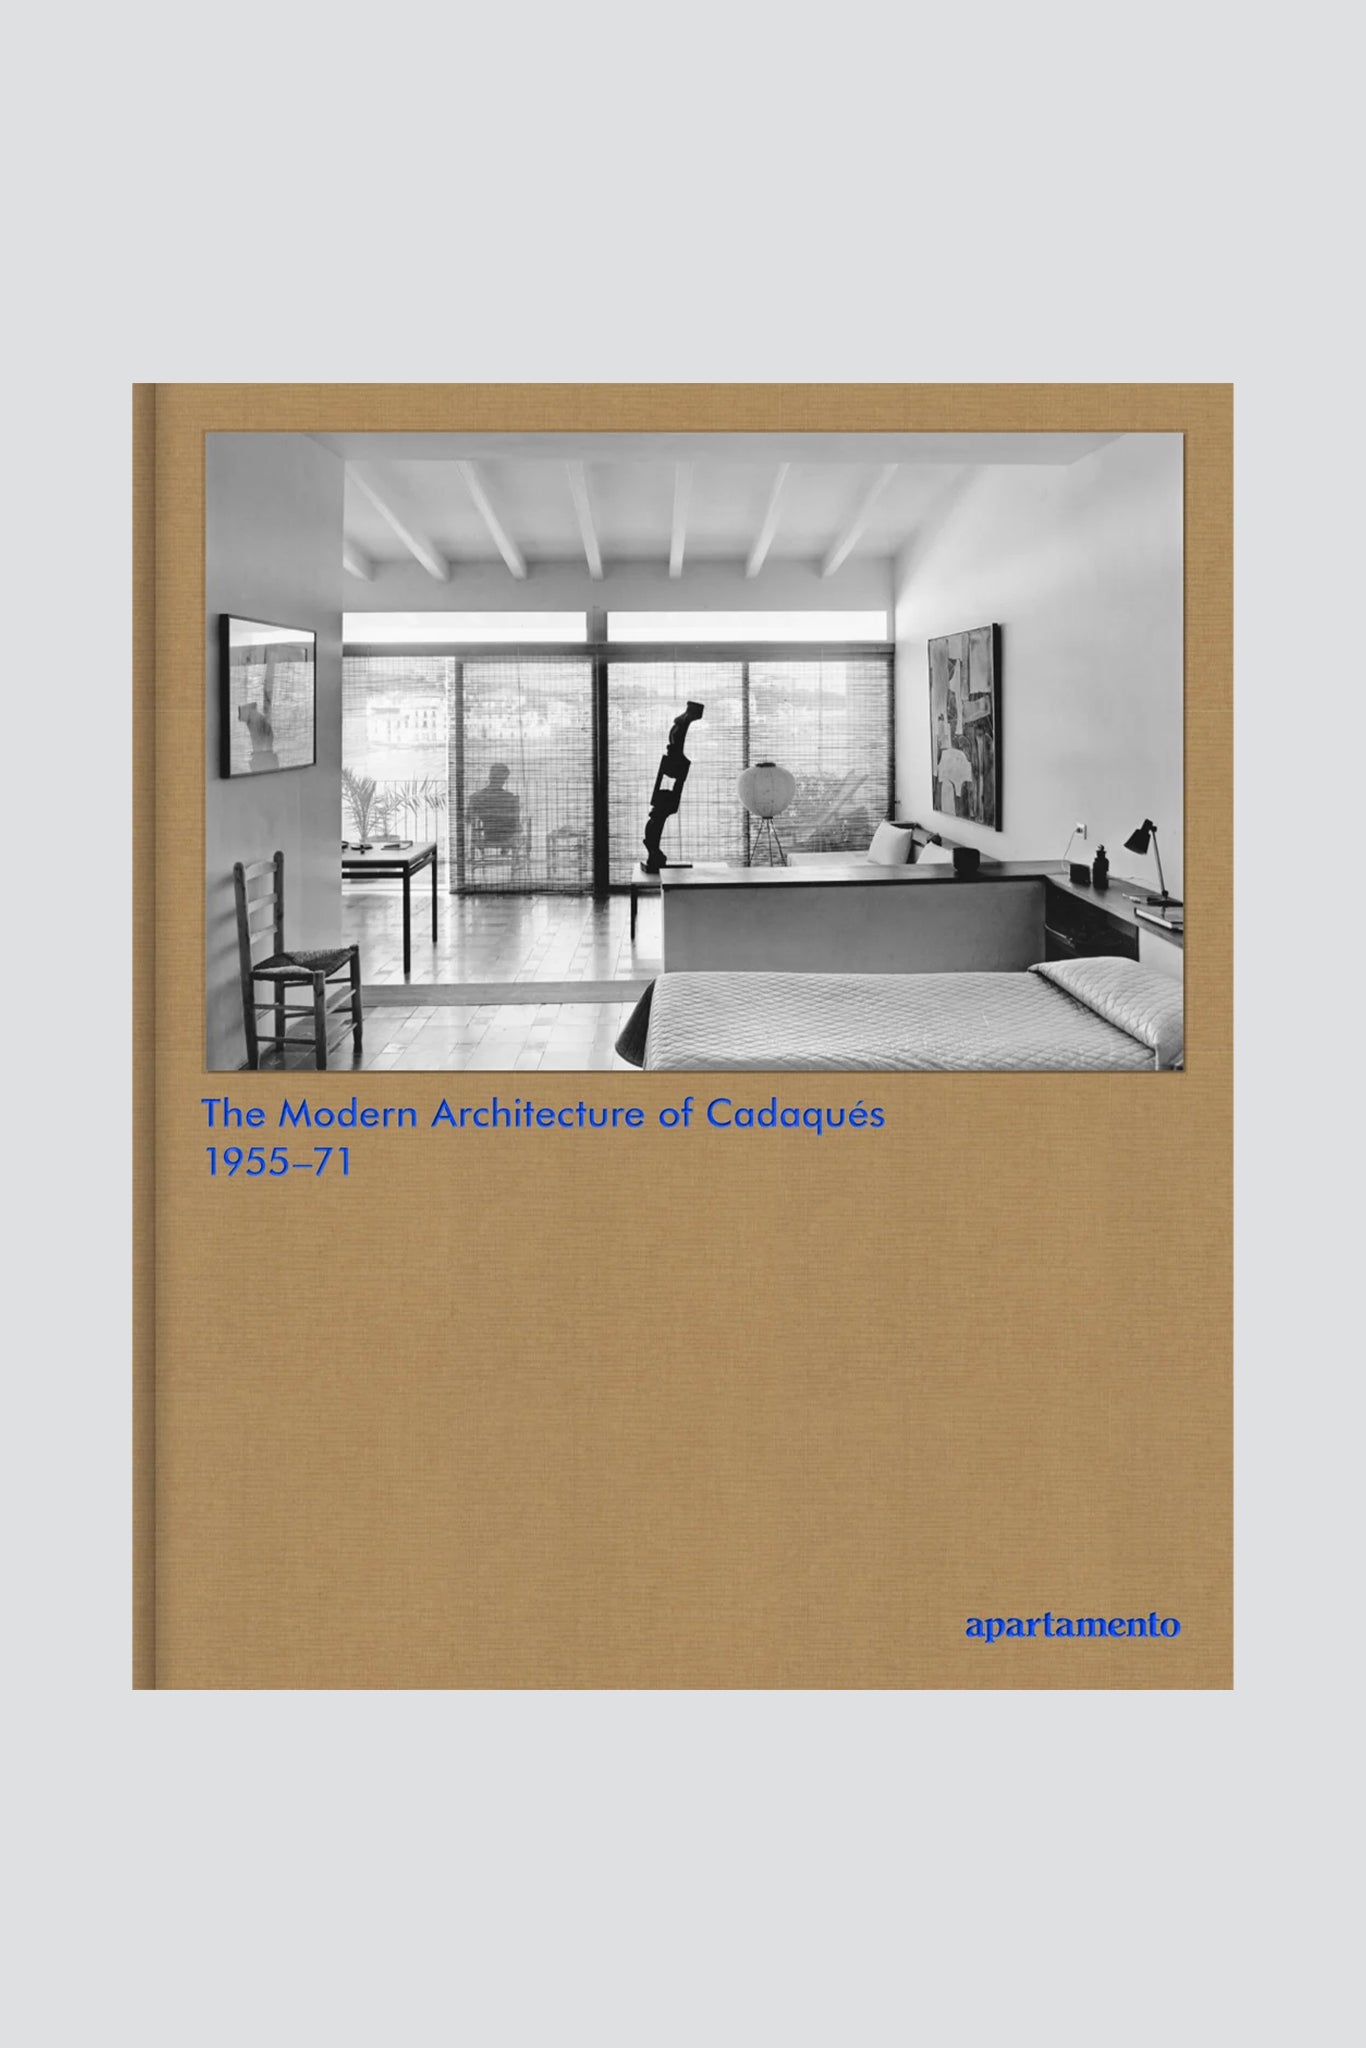 The Modern Architecture of Cadaqués 1955-71